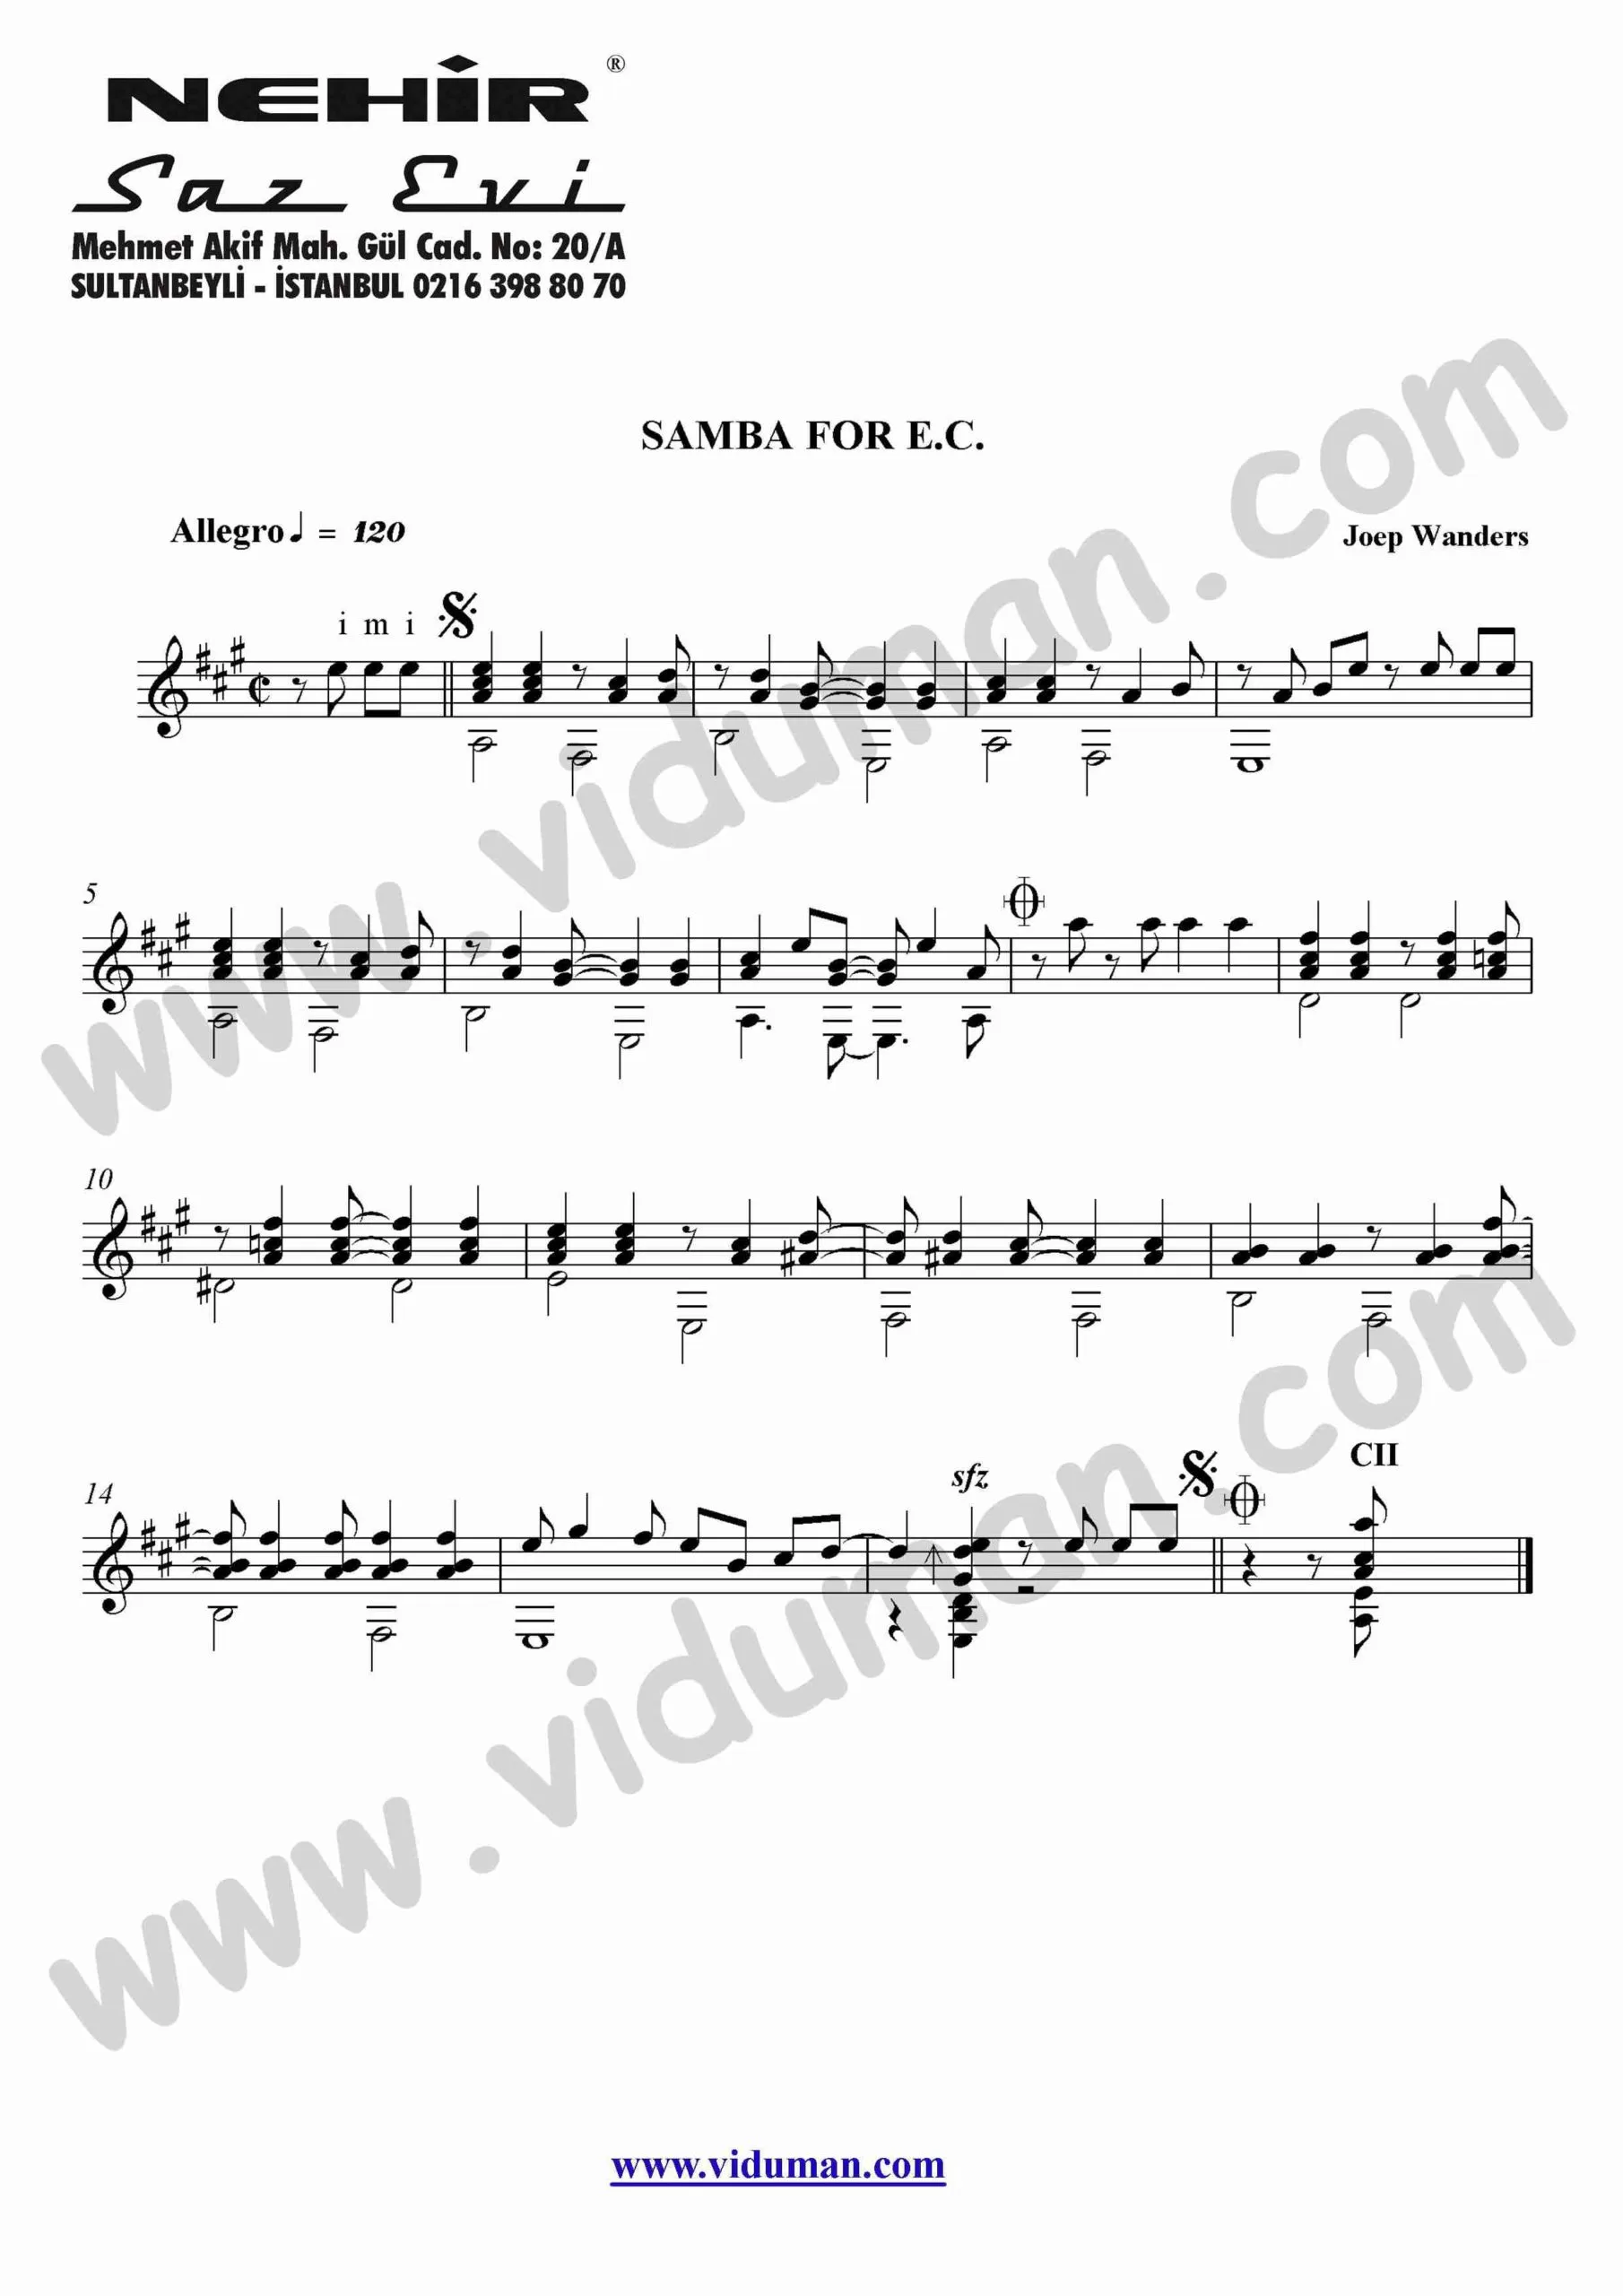 62- Samba For E.C. (Joep Wanders)